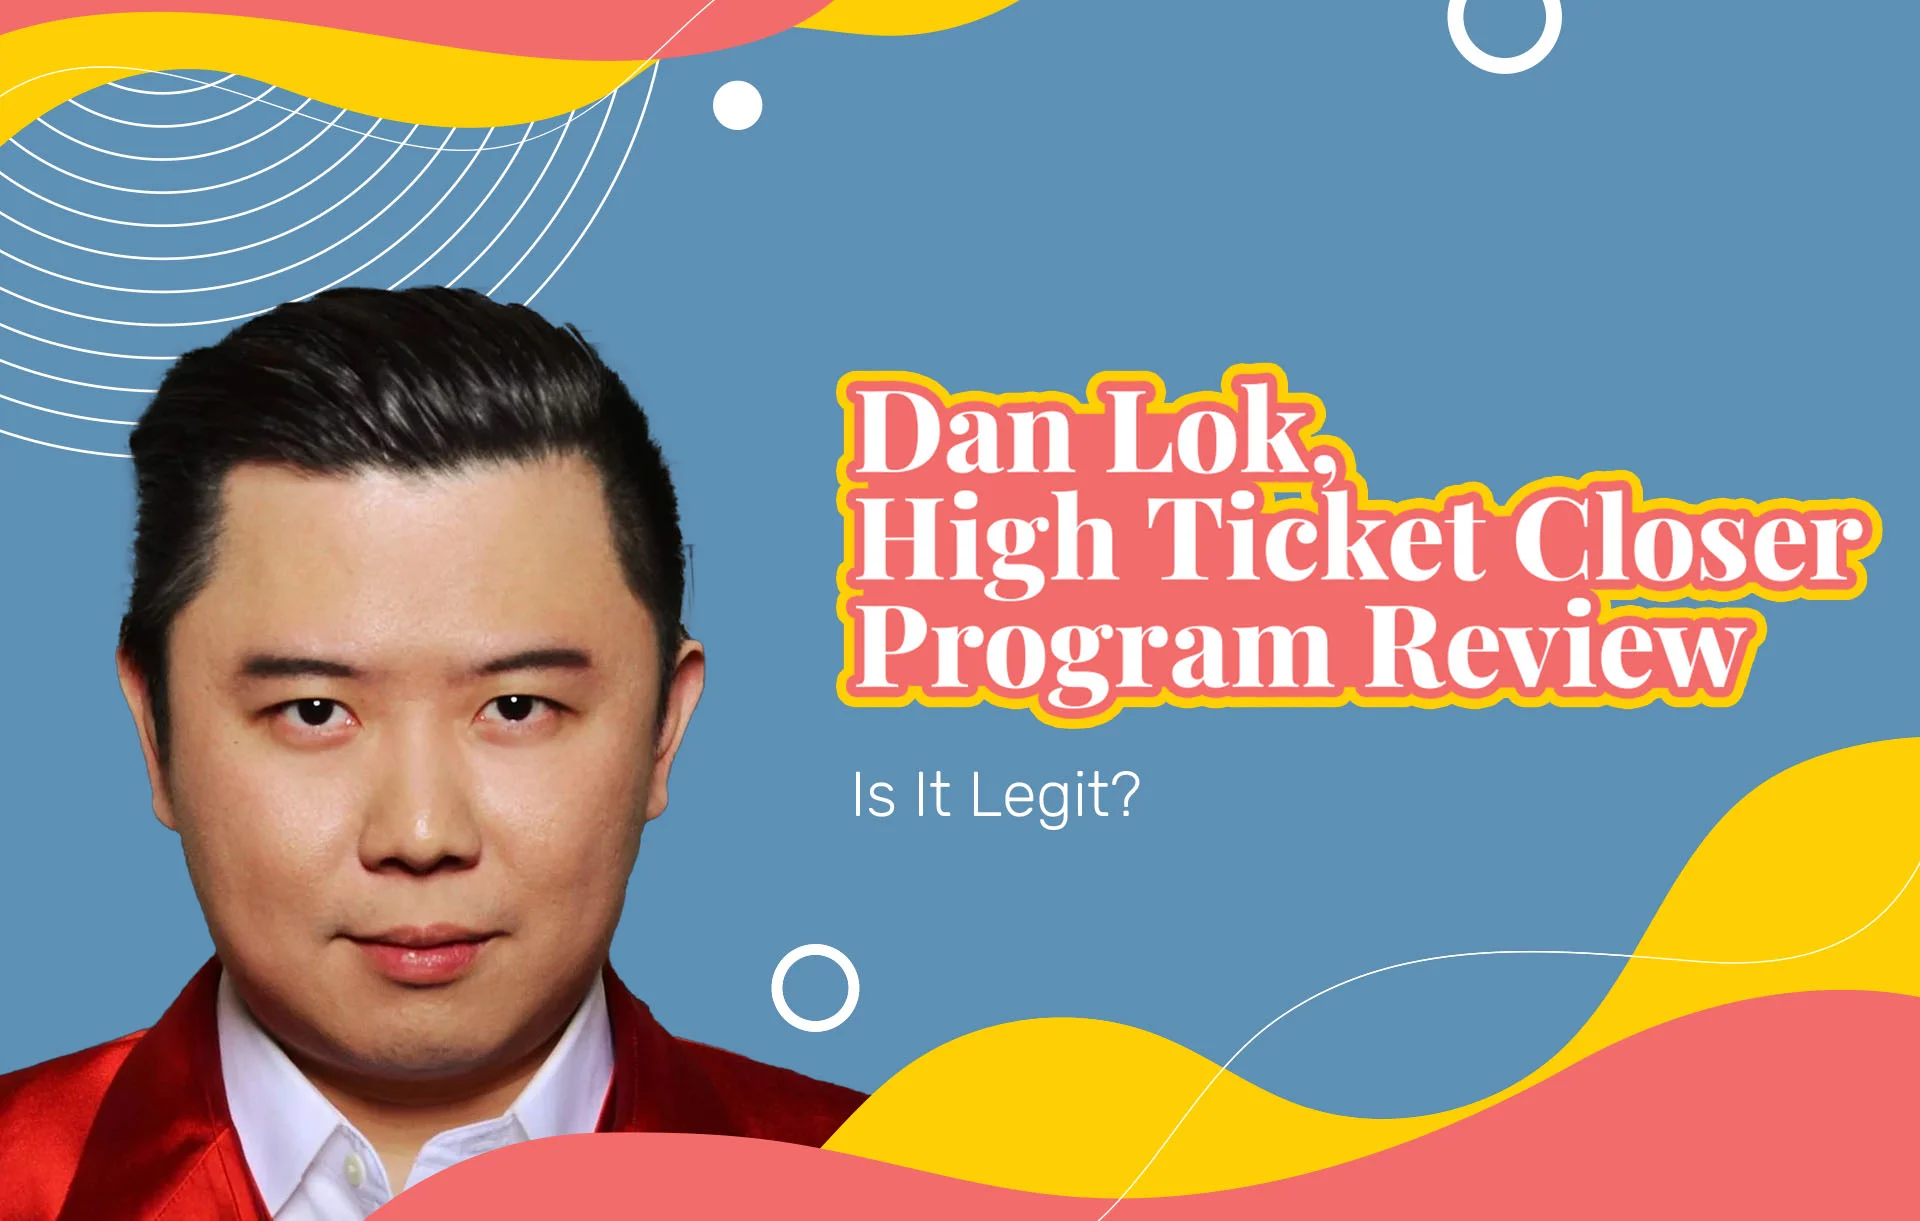 Dan Lok High Ticket Closer Program Review: Is It Legit?